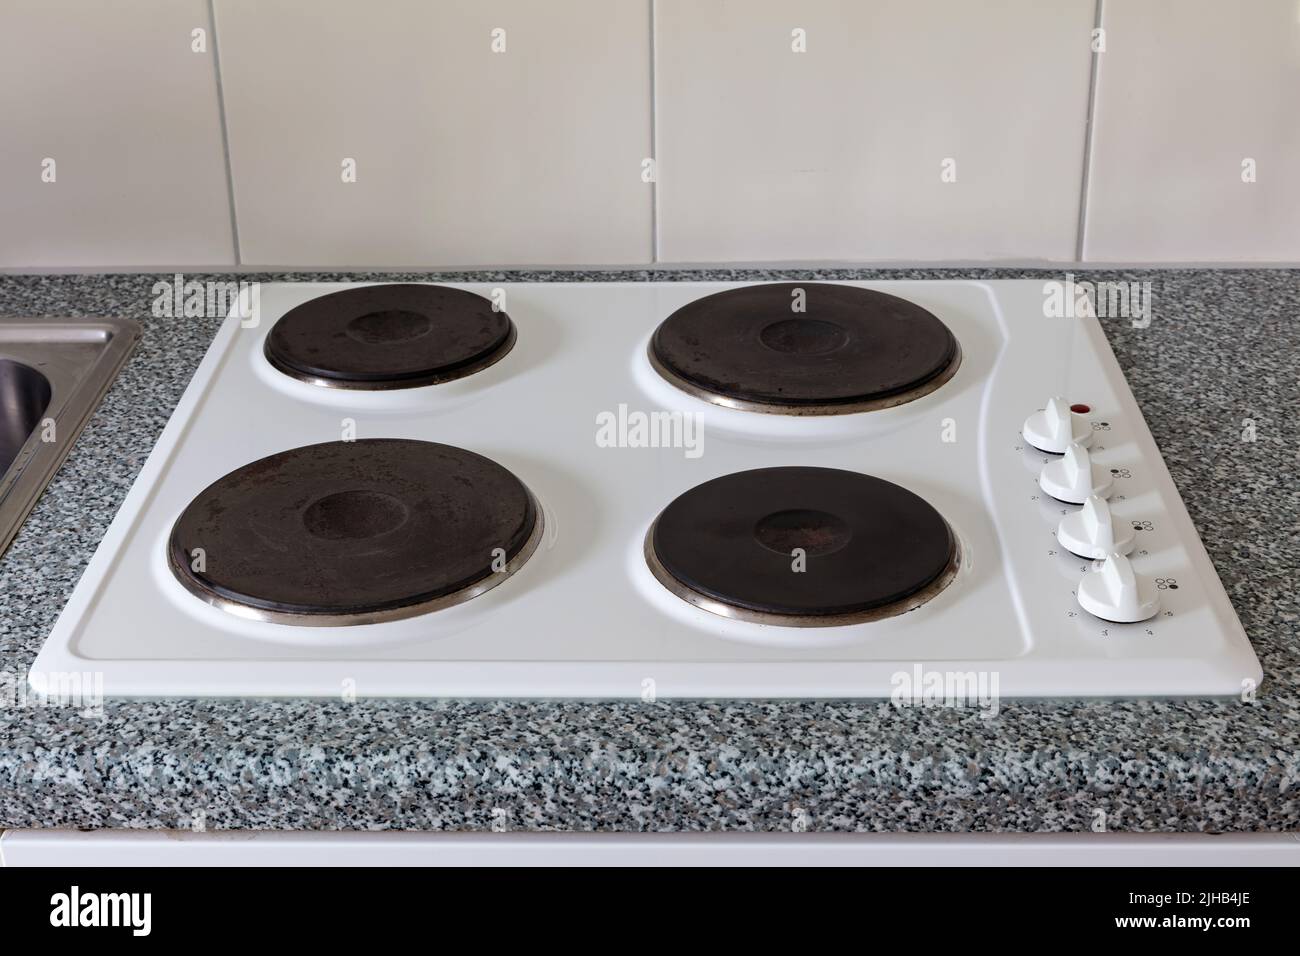 https://c8.alamy.com/comp/2JHB4JE/electric-cooker-on-worktop-in-kitchen-2JHB4JE.jpg